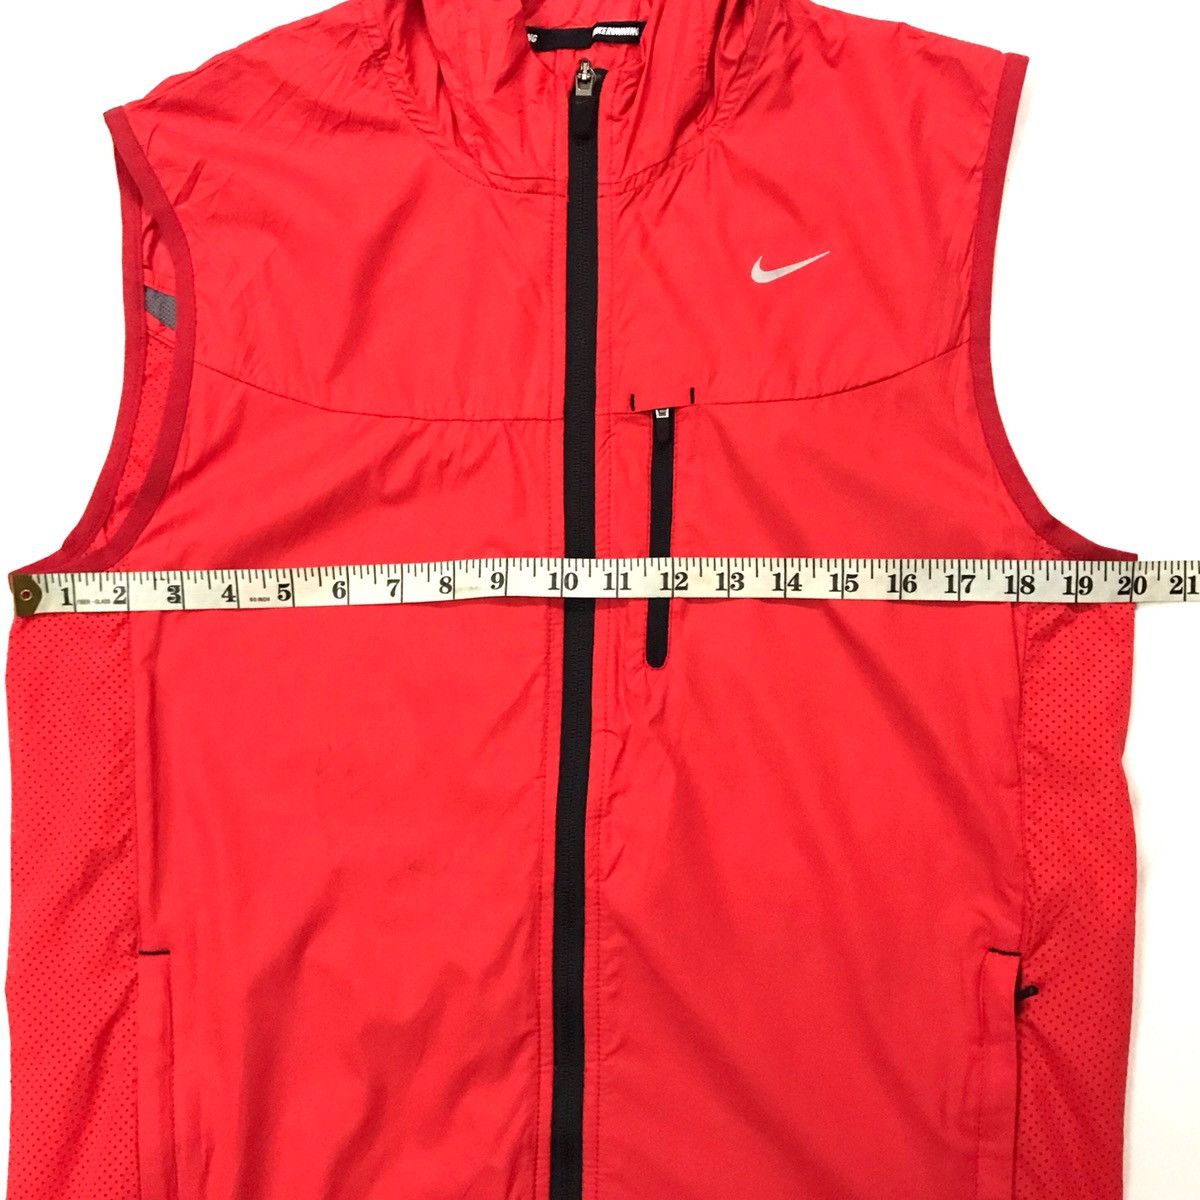 Nike Nike running vest hoodie Size US M / EU 48-50 / 2 - 9 Thumbnail